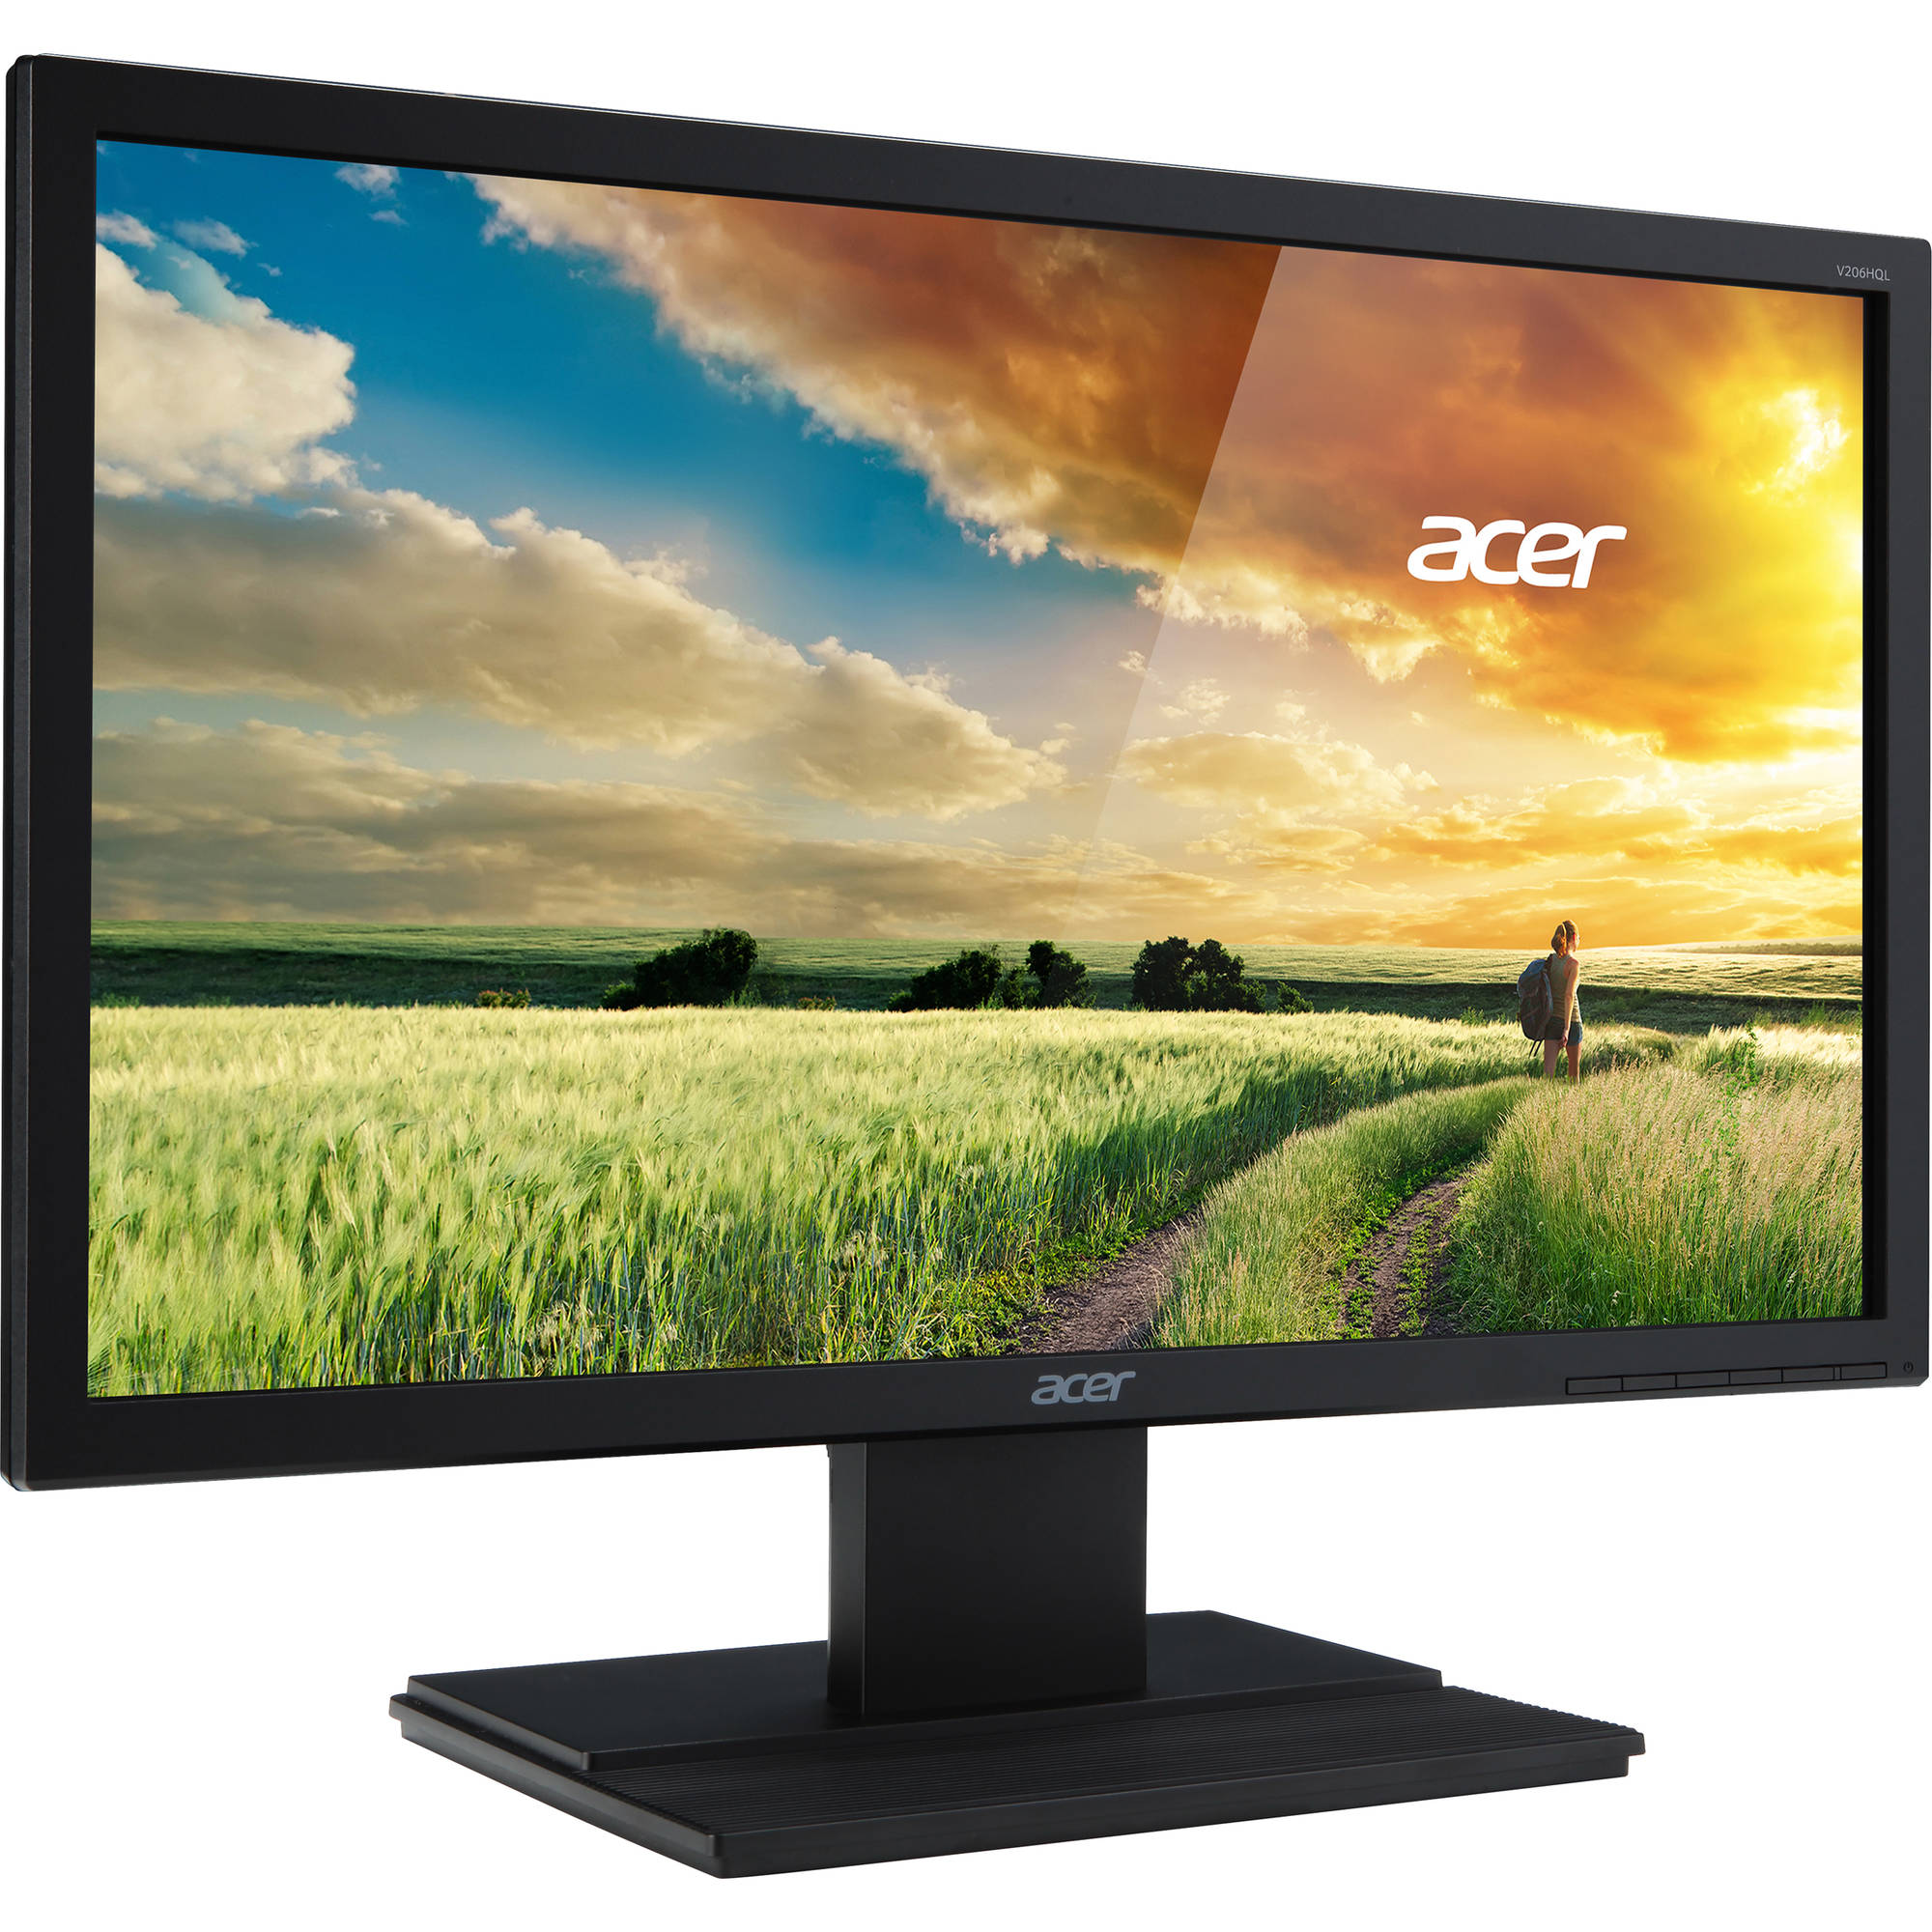 Acer V206HQL LED Monitor - Rayanstar